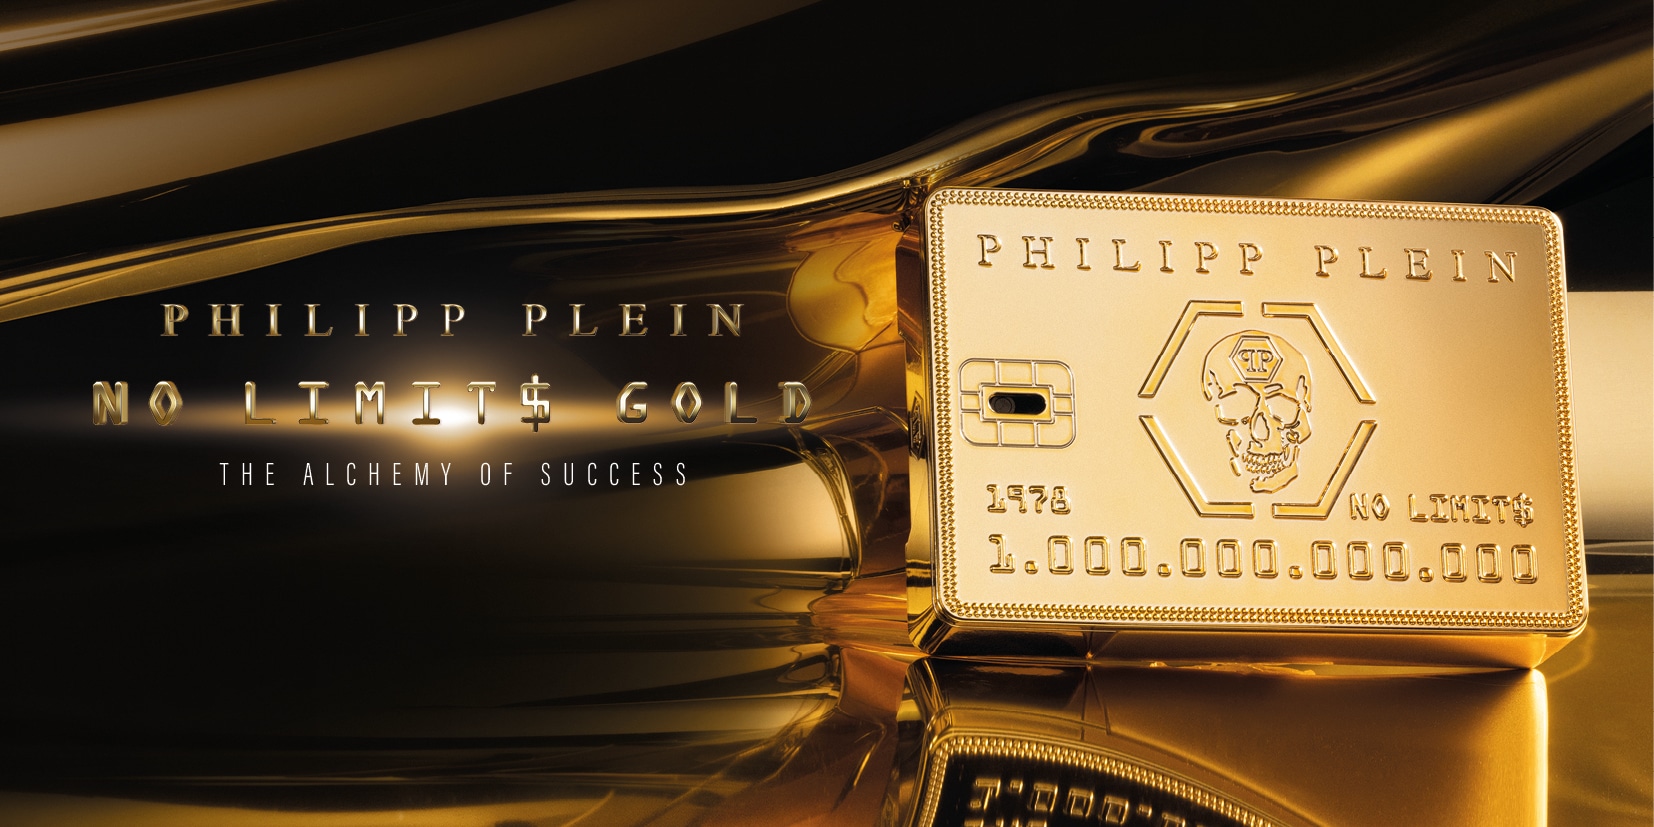 Philipp Plein No Limits Gold parfum